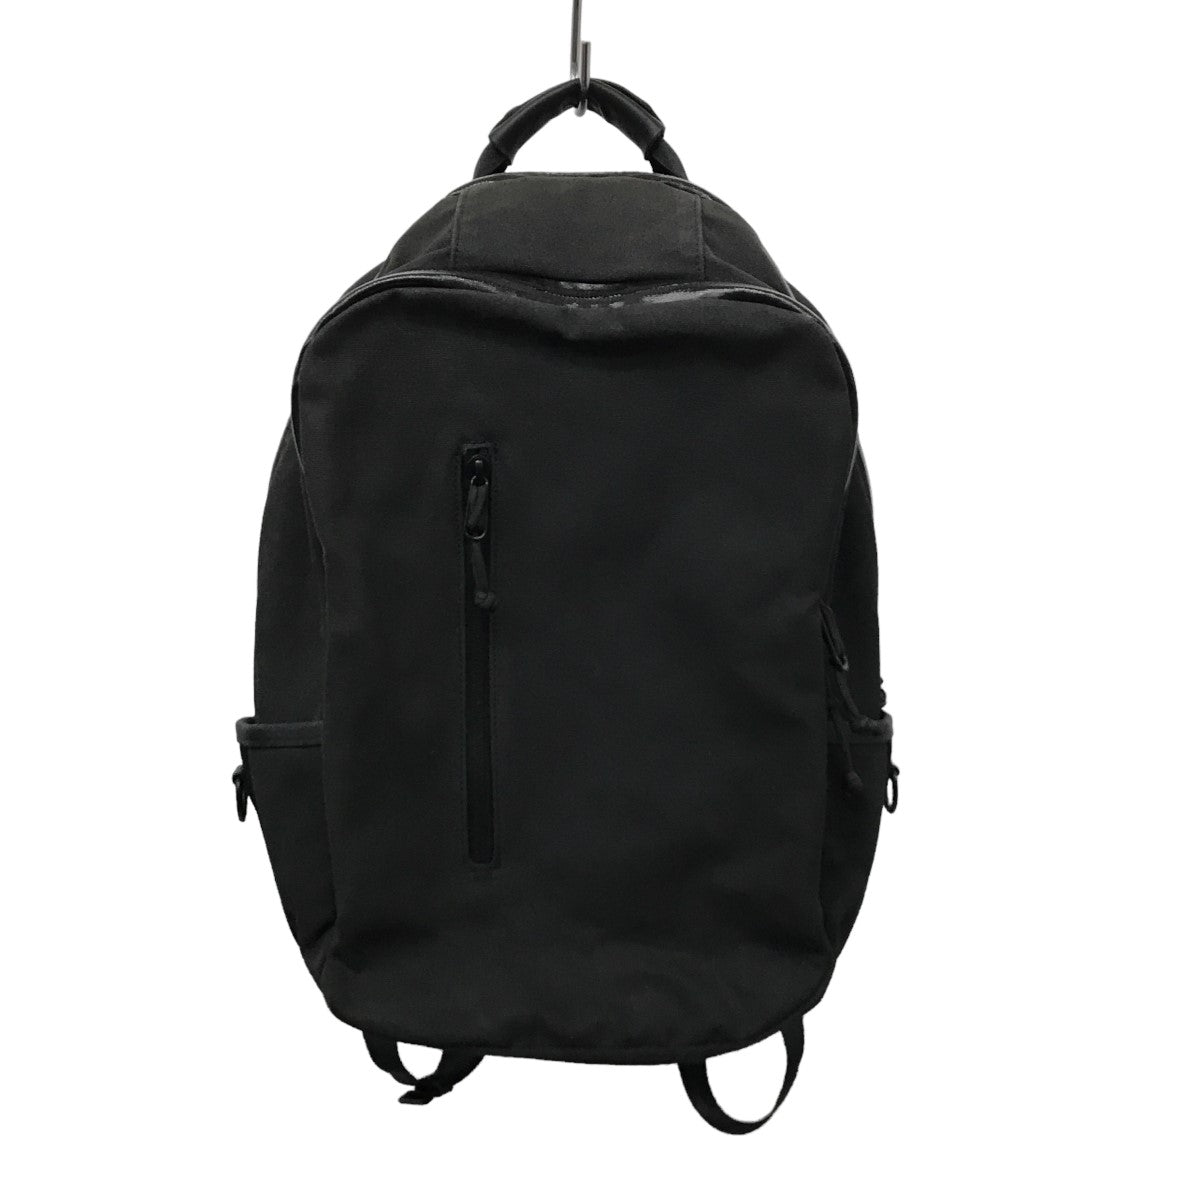 DEFY BAGS – Bucktown Backpackまだまだ使用可能ですが